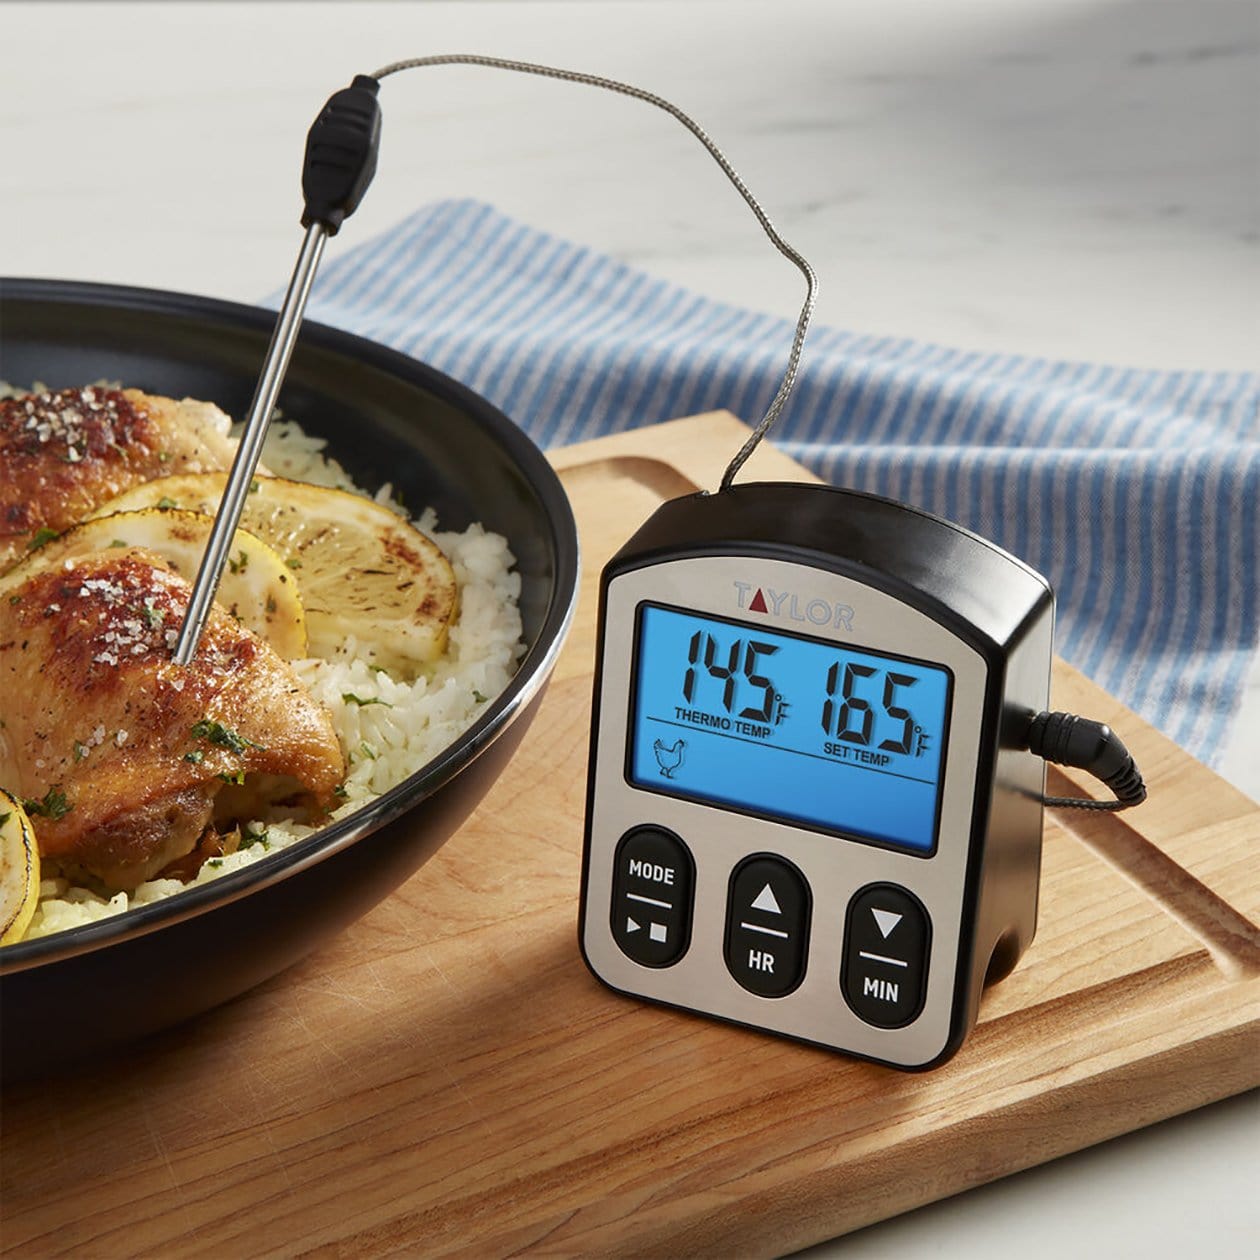 Taylor Digital Waterproof Food Thermometer - Folding Probe - Backlit Display - Presets - Includes 2 AAA Batteries